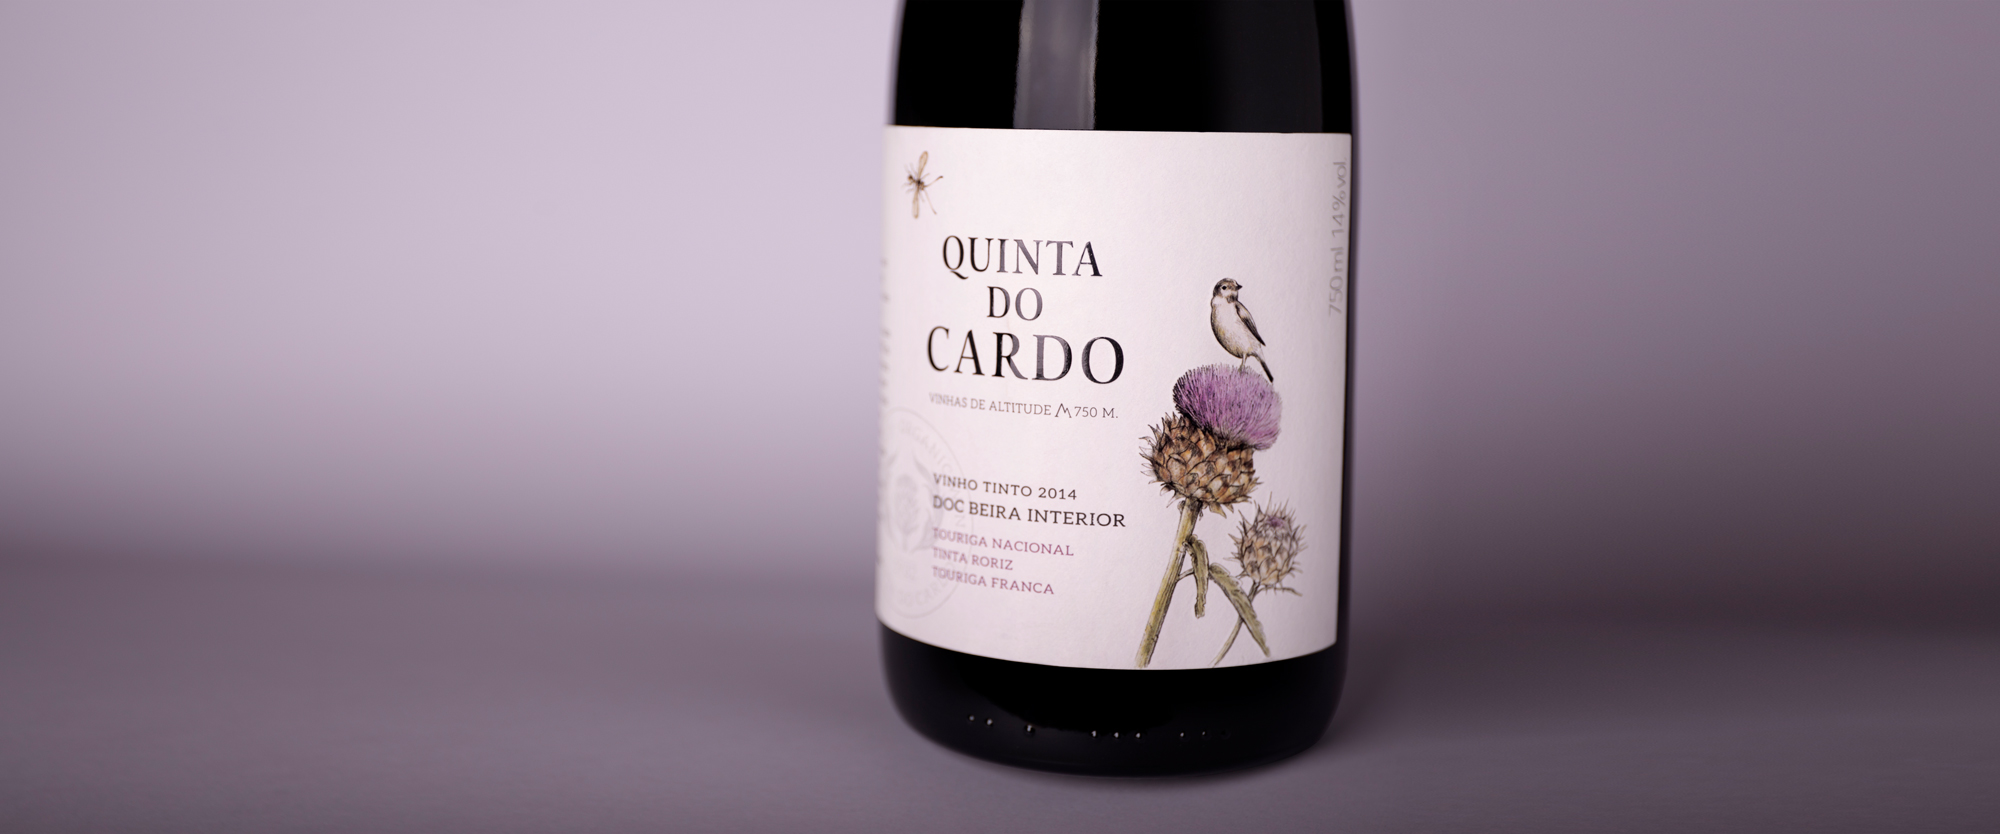 Rita Rivotti Designs The Identity And Packaging for Quinta do Cardo